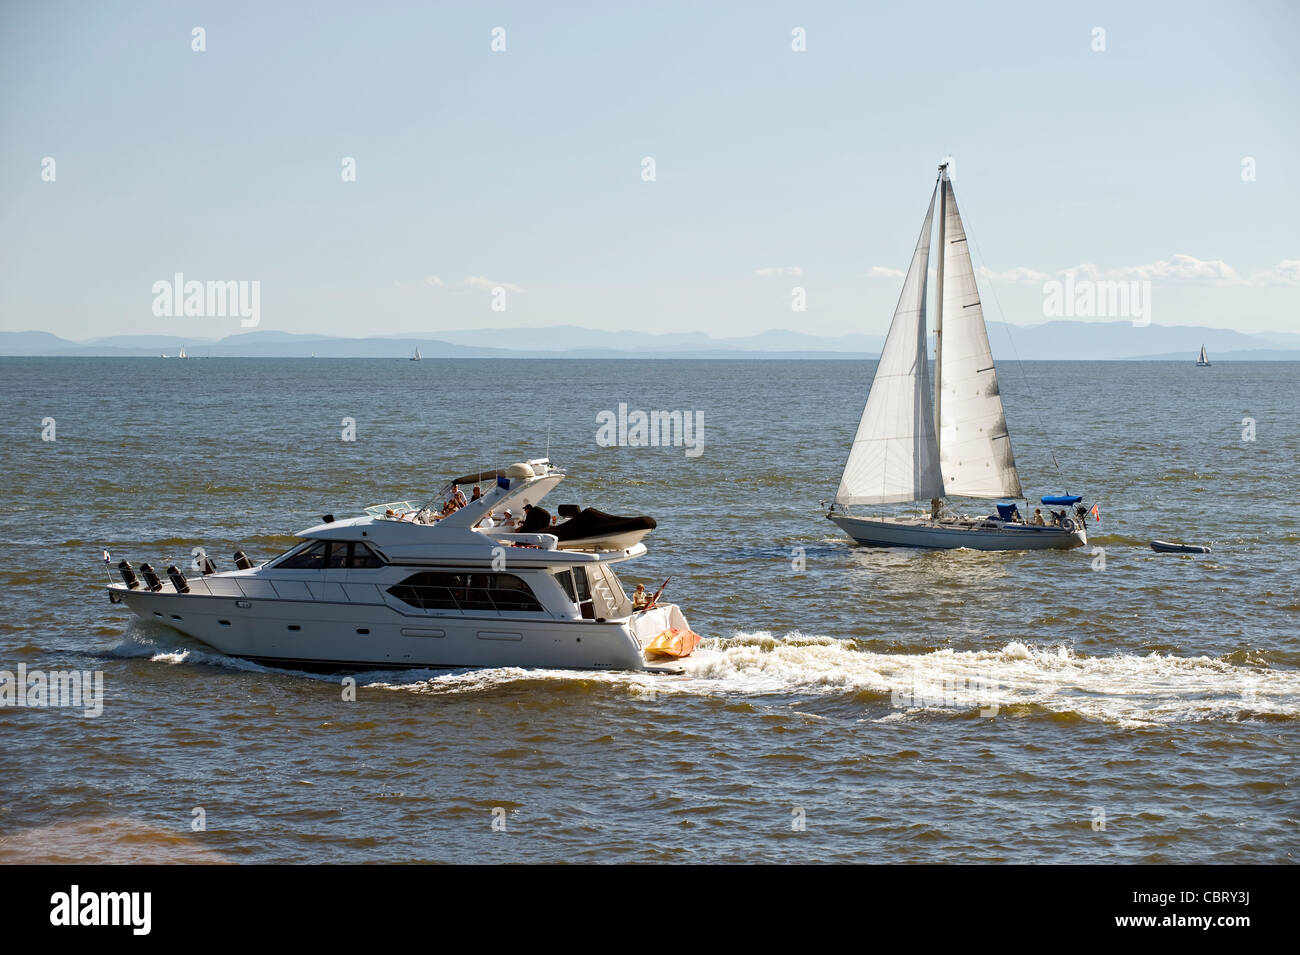 Recreational boats on the sea Stock Photo